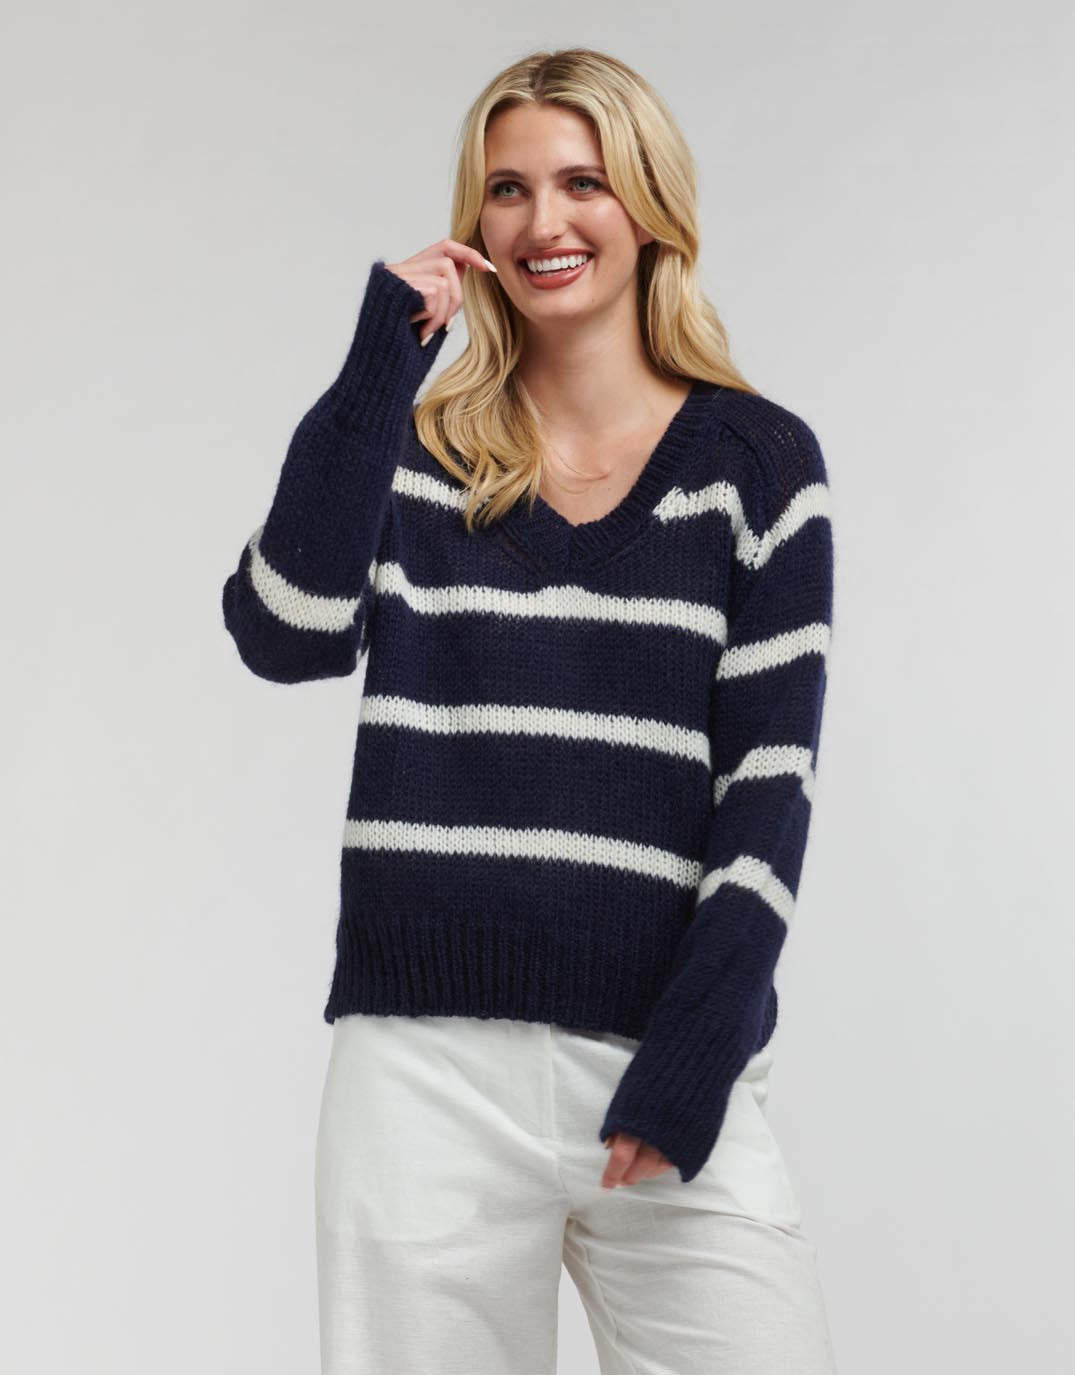 365-days-spencer-stripe-mohair-knit-navy-white-womens-clothing